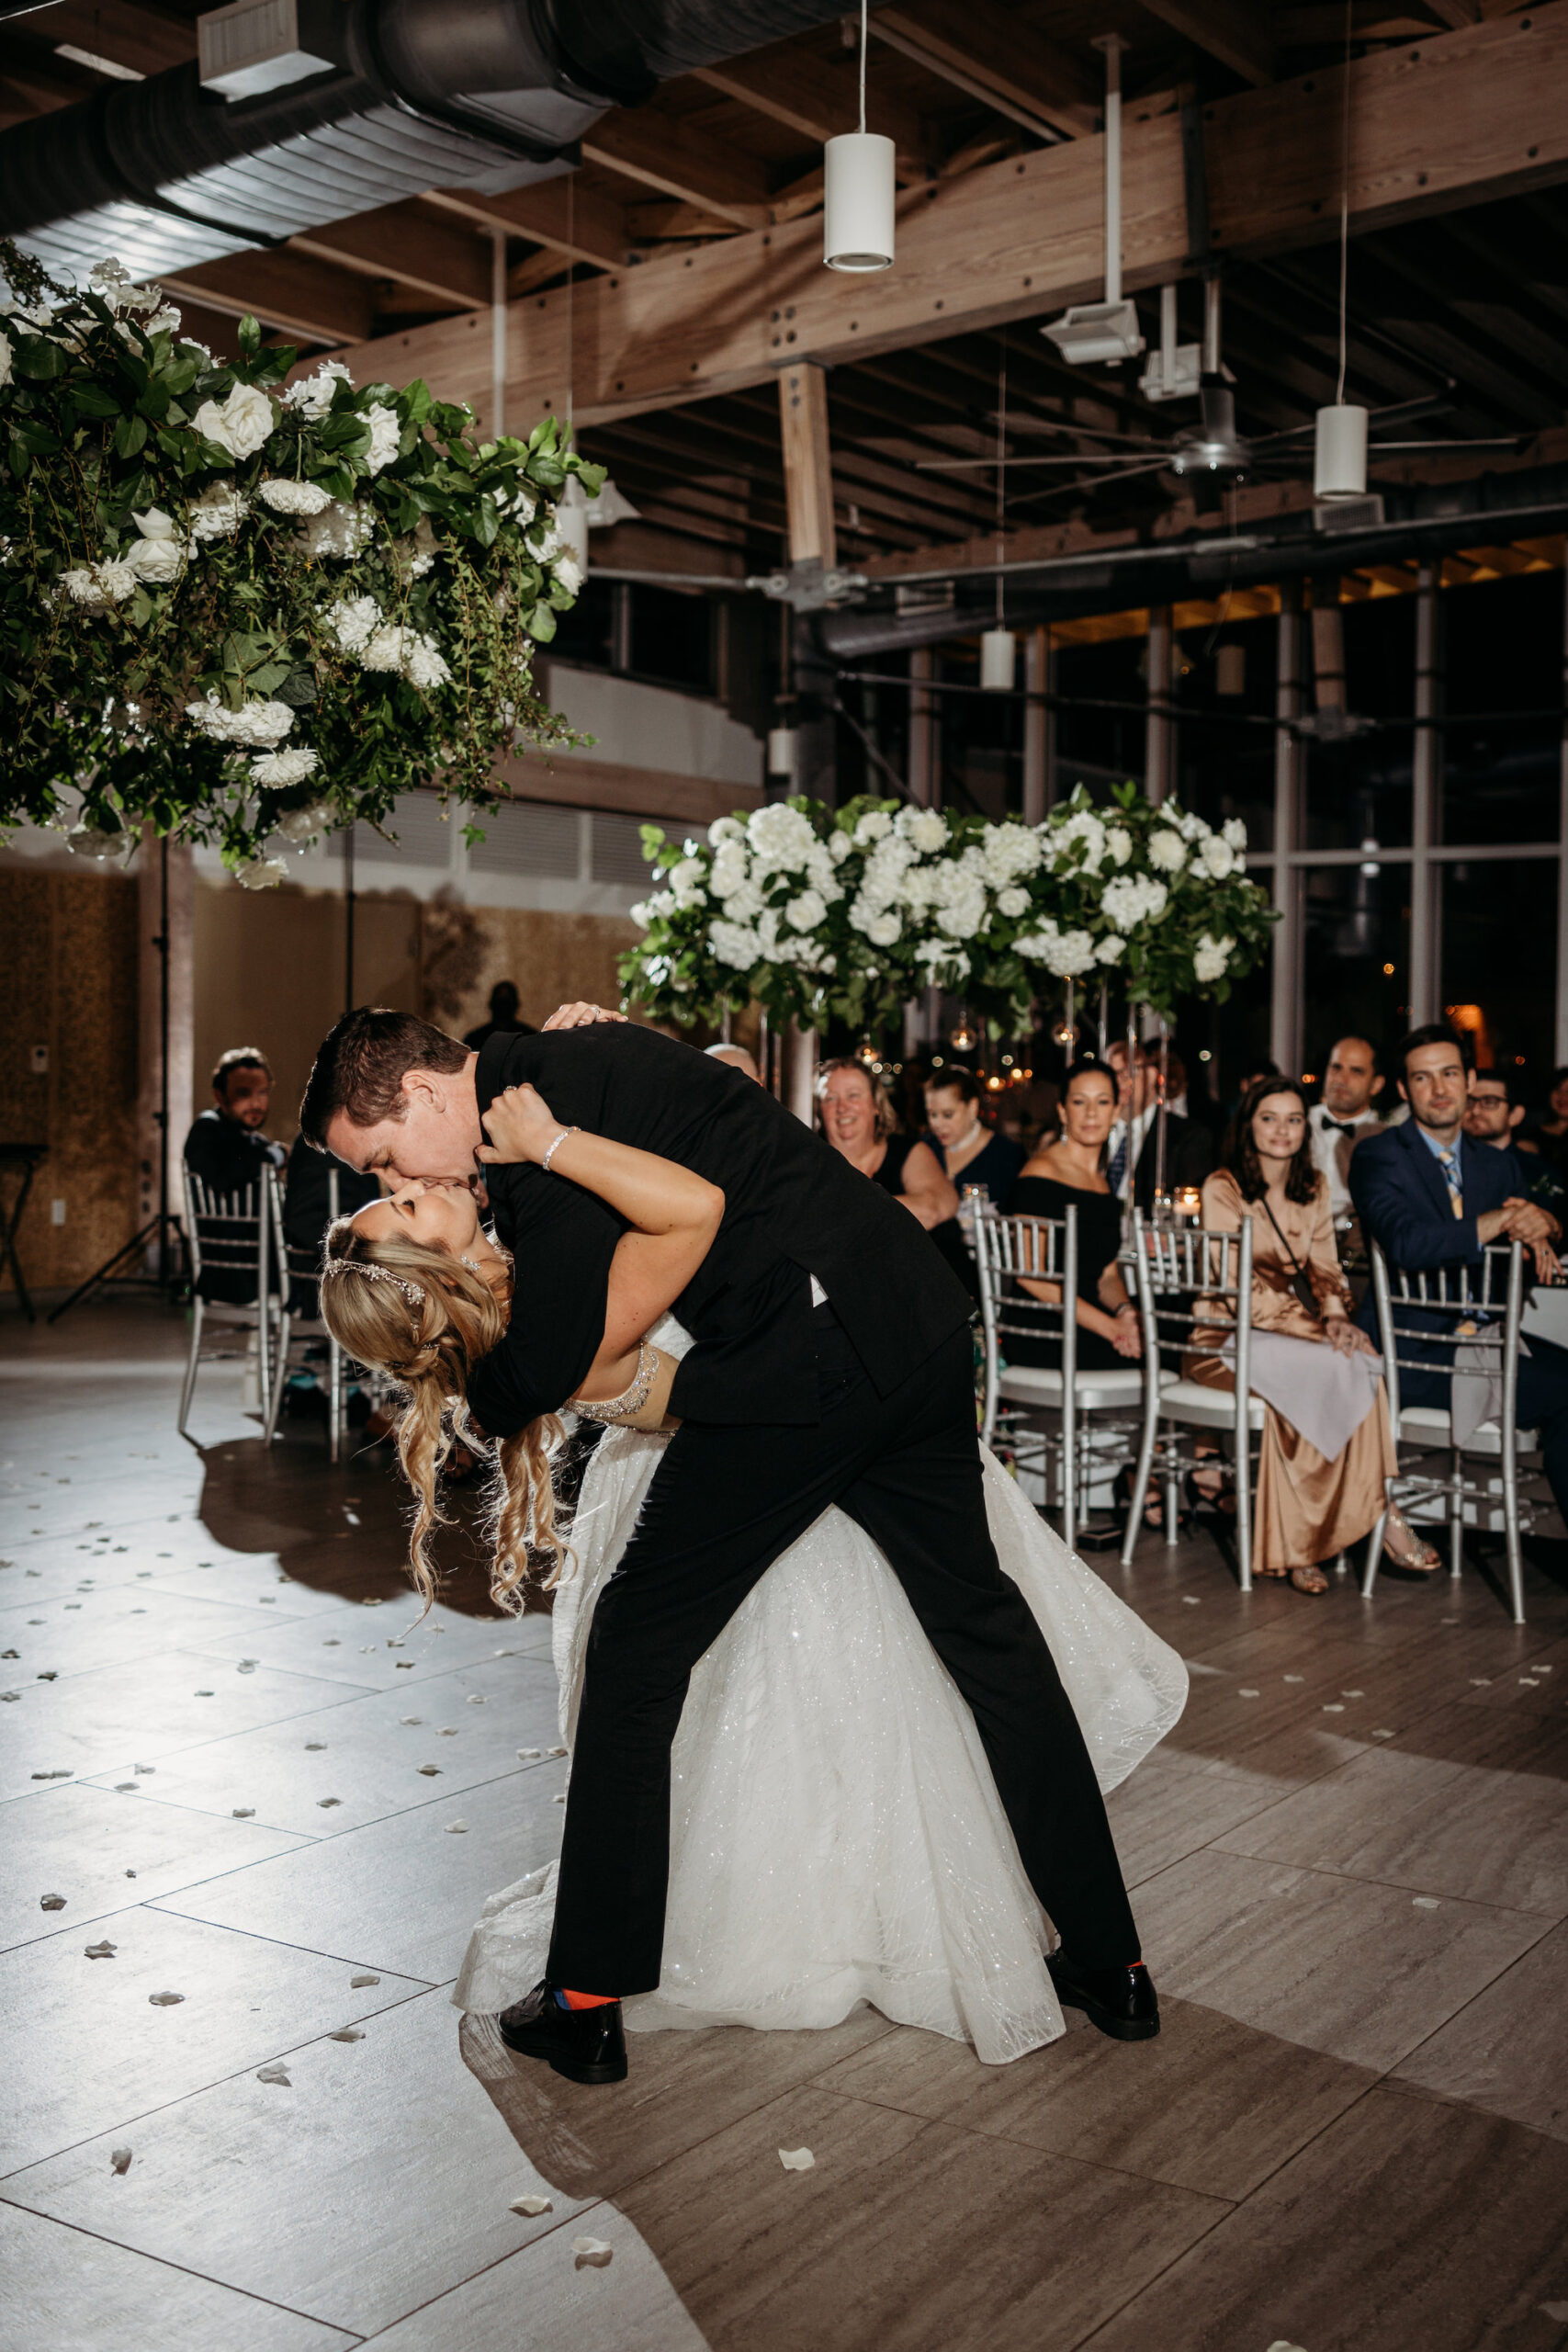 Winter Inspired Wedding Reception, Groom Dip Kissing Bride During Wedding Reception Dance | Tampa Bay Wedding Planner MDP Events